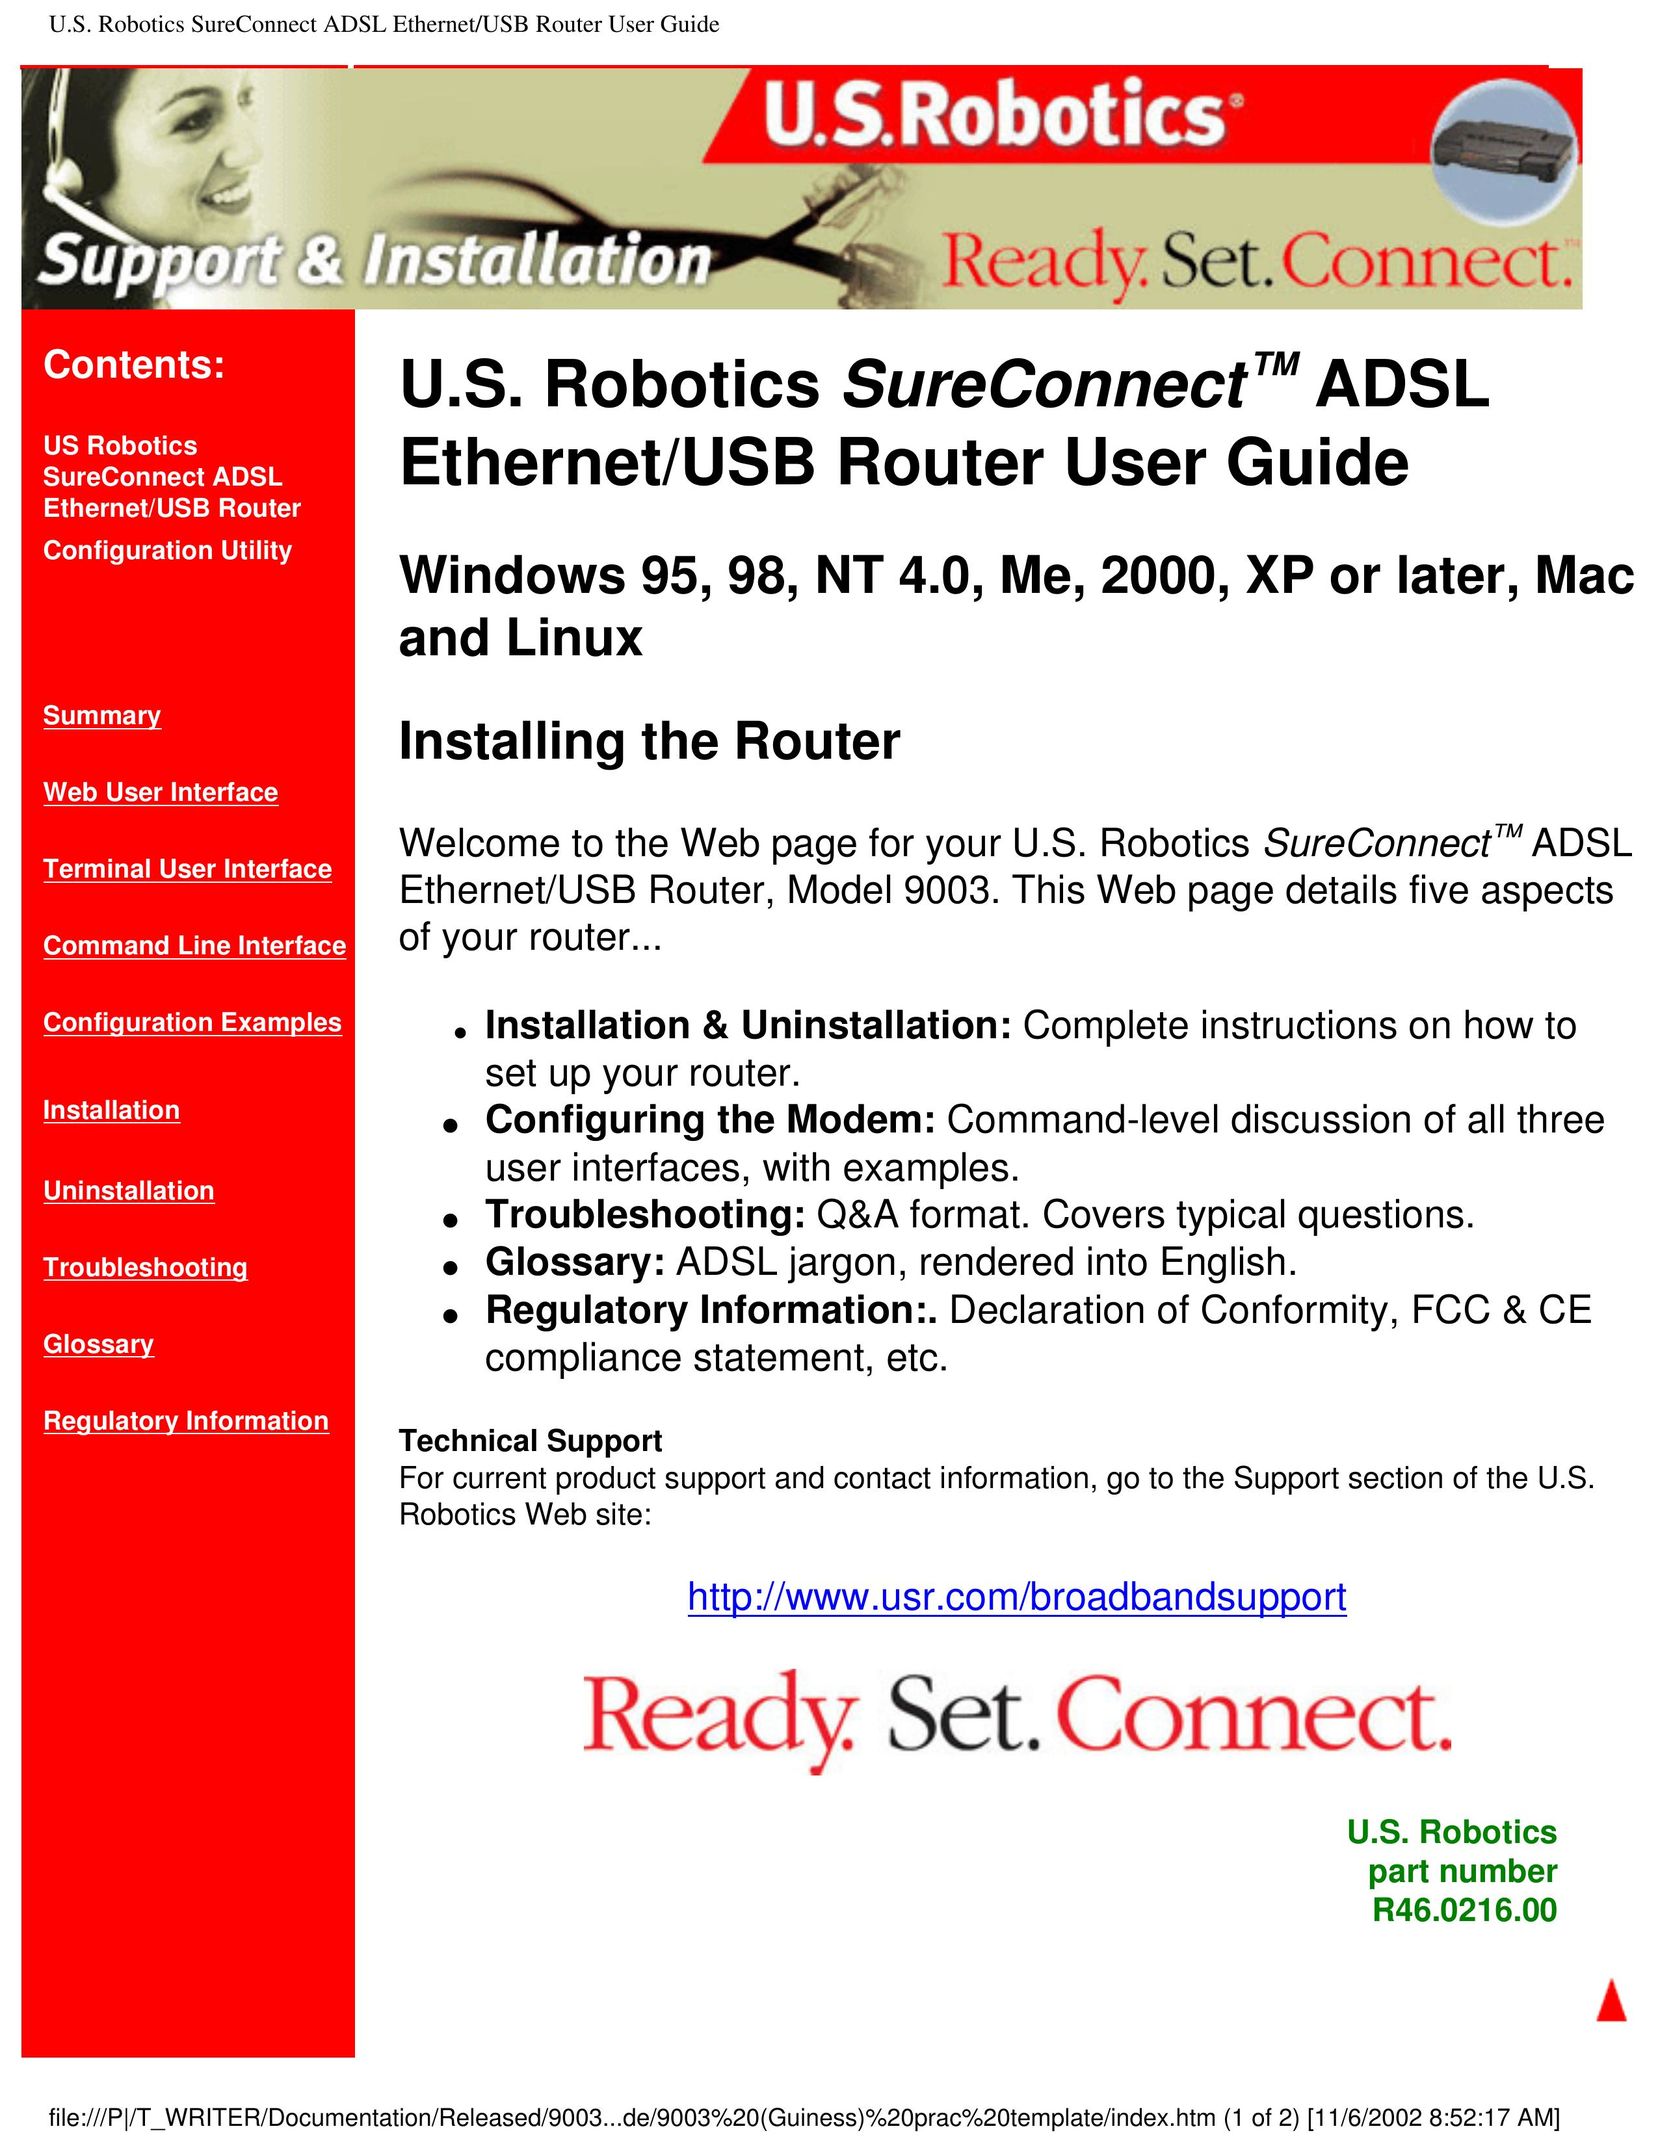 USRobotics U.S. Robotics SureConnect ADSL Ethernet/USB Router Network Router User Manual